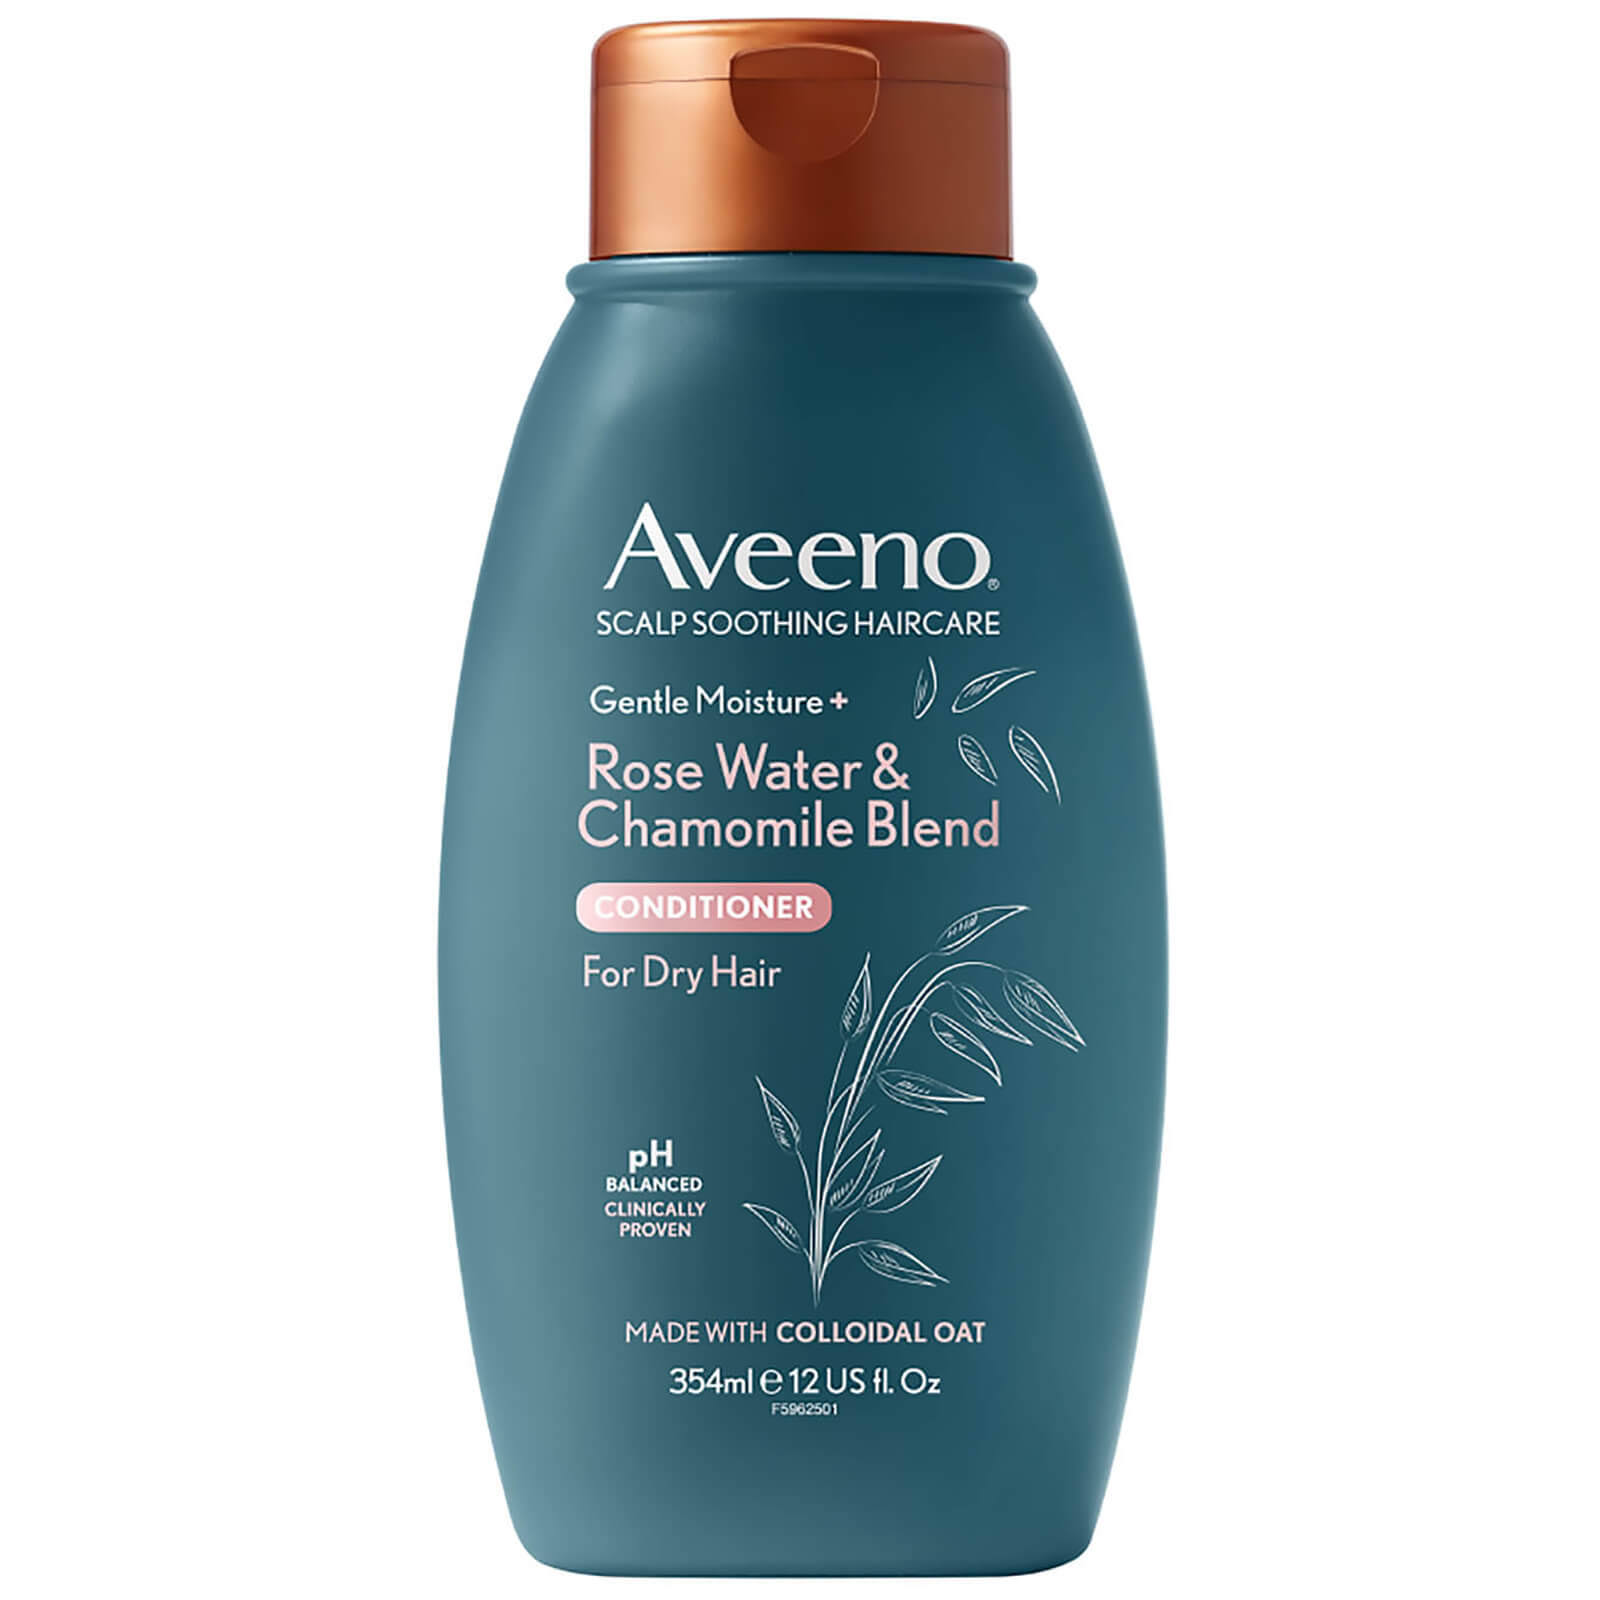 Aveeno Rose Water & Chamomile Blend Conditioner 354ml